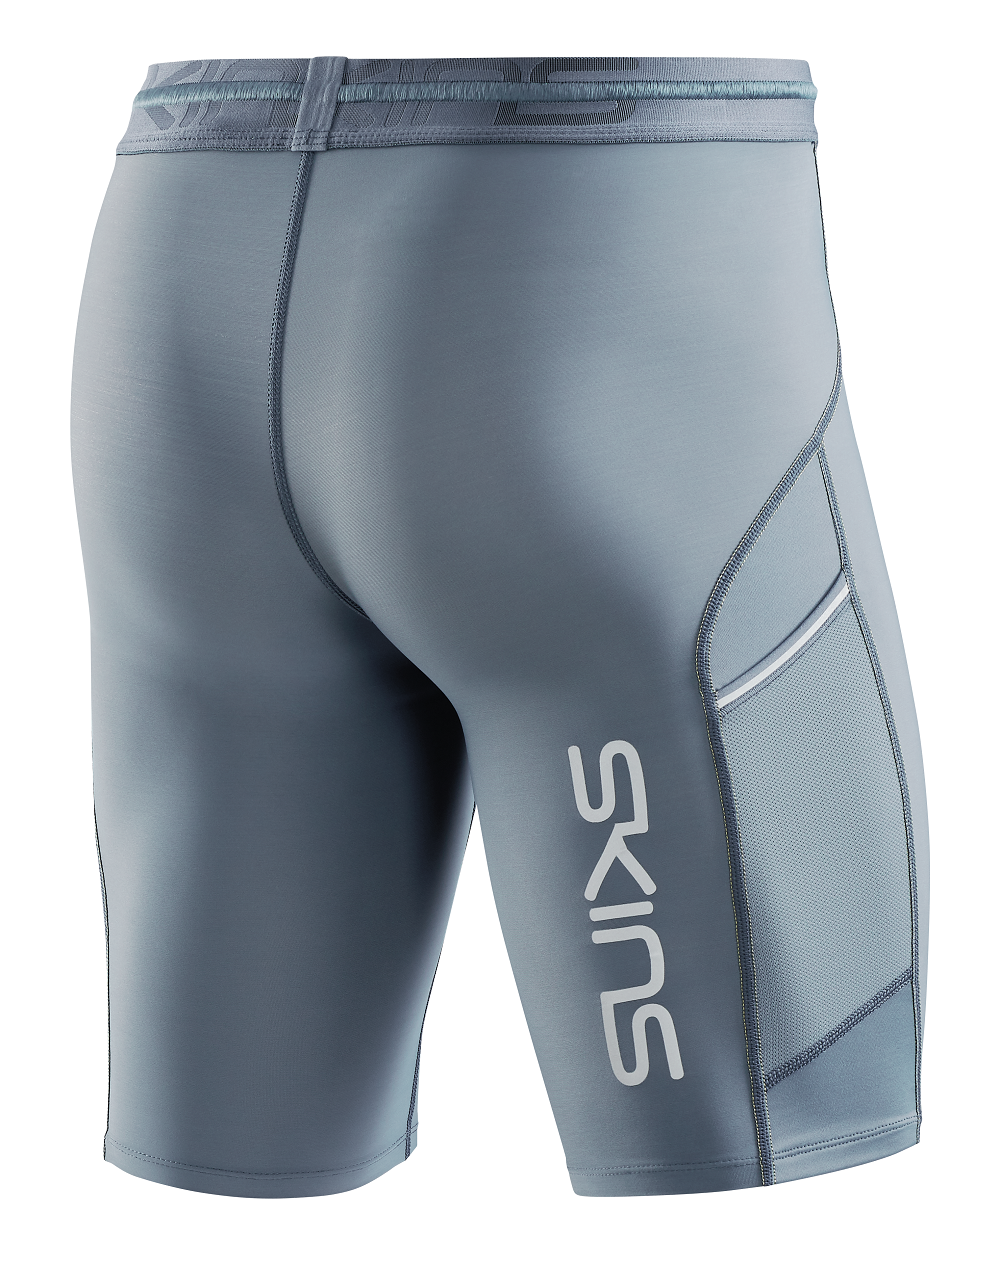 SKINS Men's Compression Half Tights 3-Series - Blue Grey